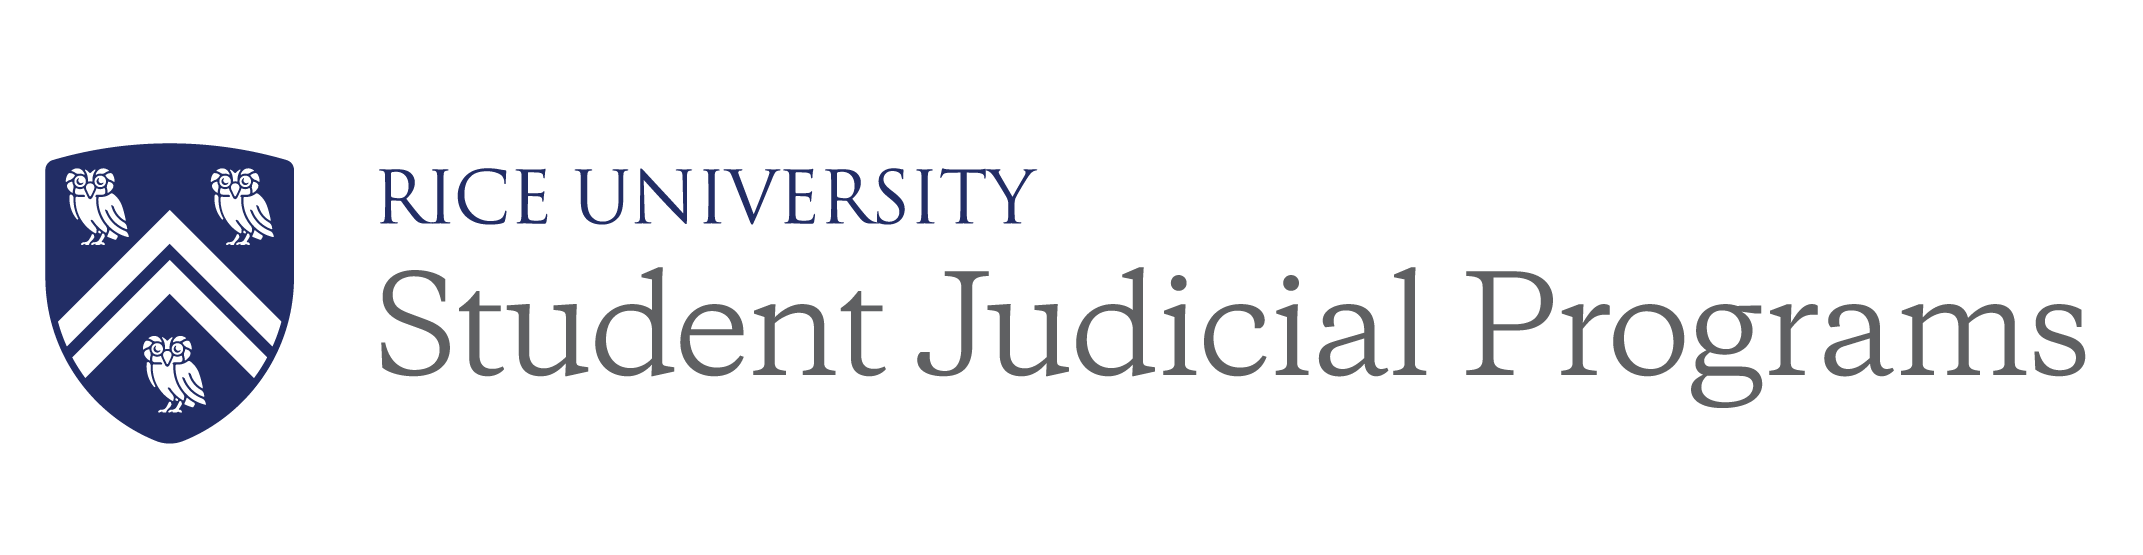 Rice University Student Judicial Programs